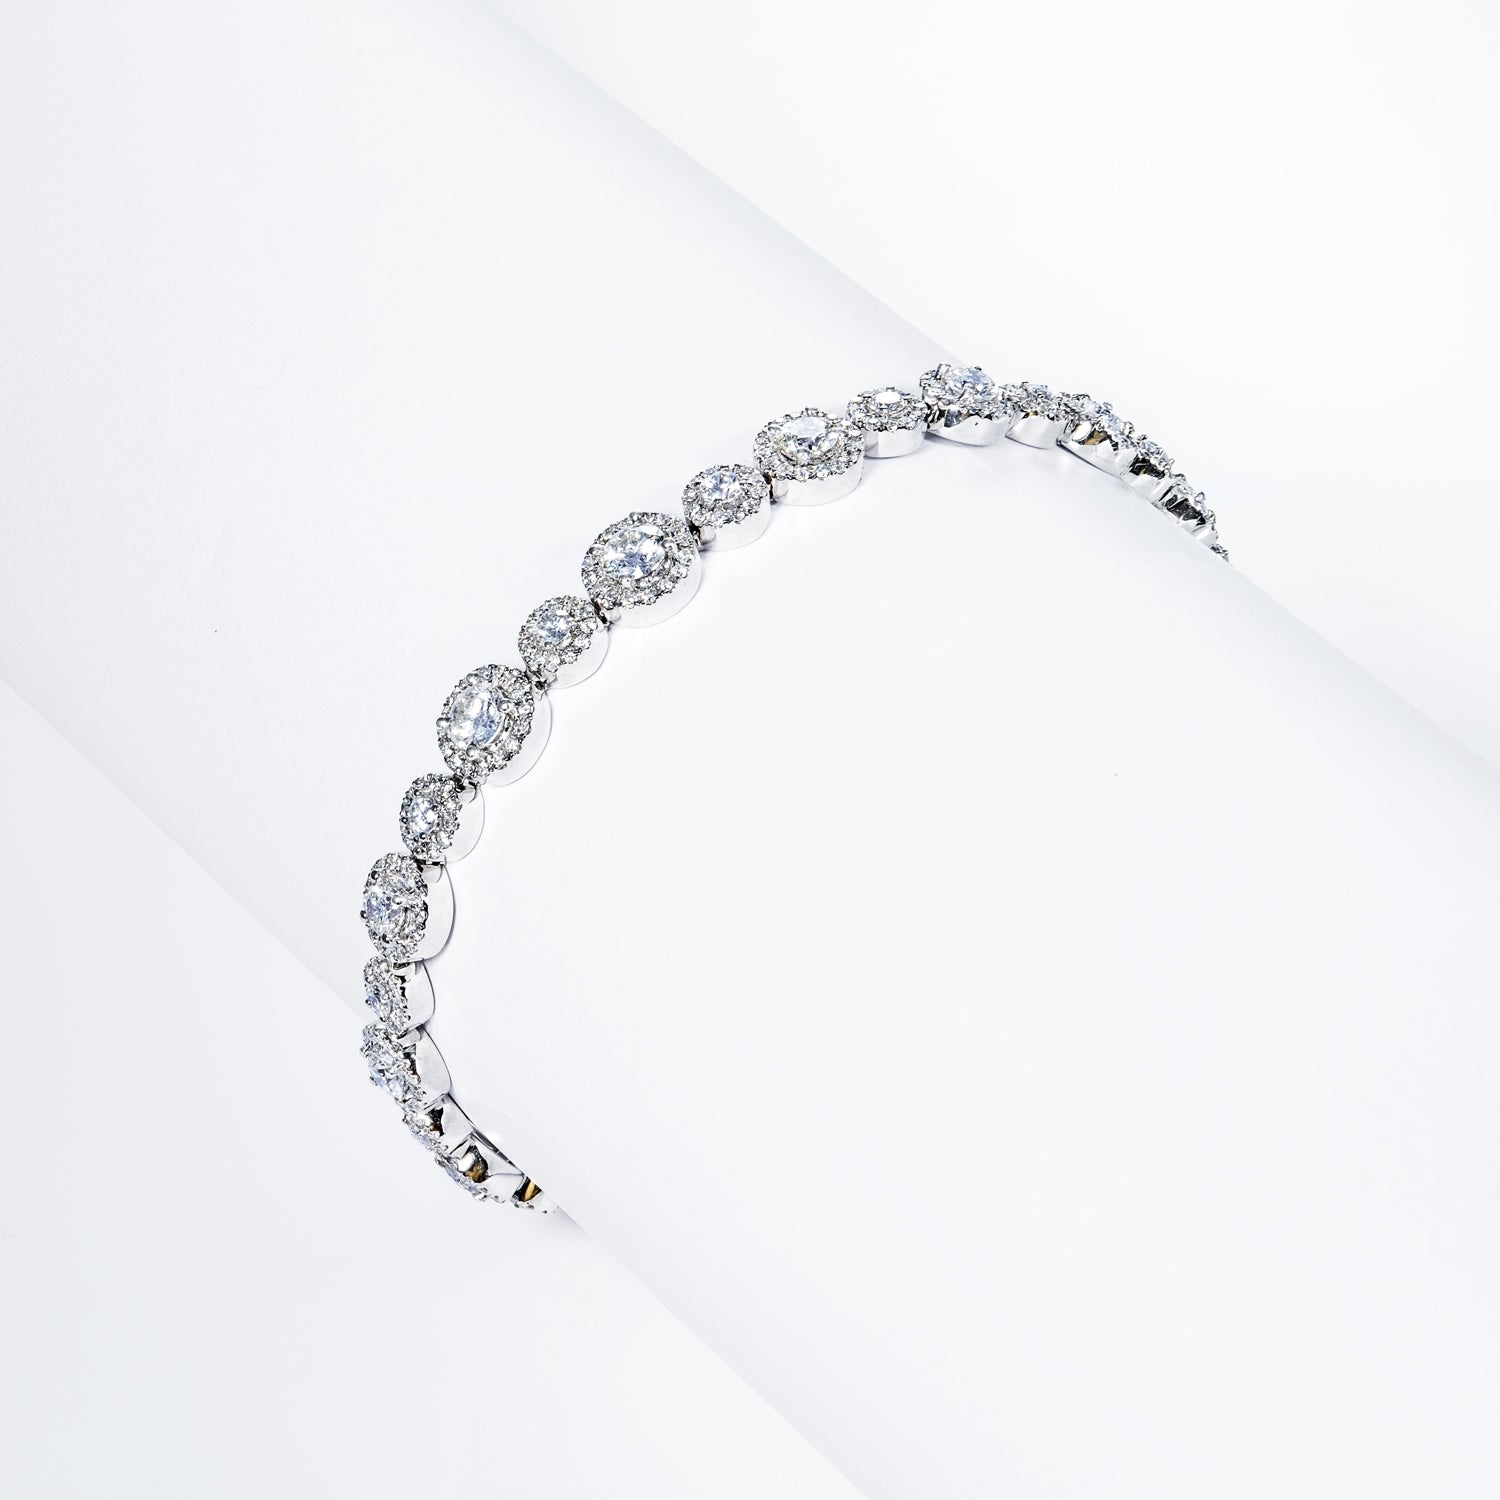 Elsie 4 Carats Round Brilliant Cut Diamond Single Row Bracelet in 18k White Gold on wrist view